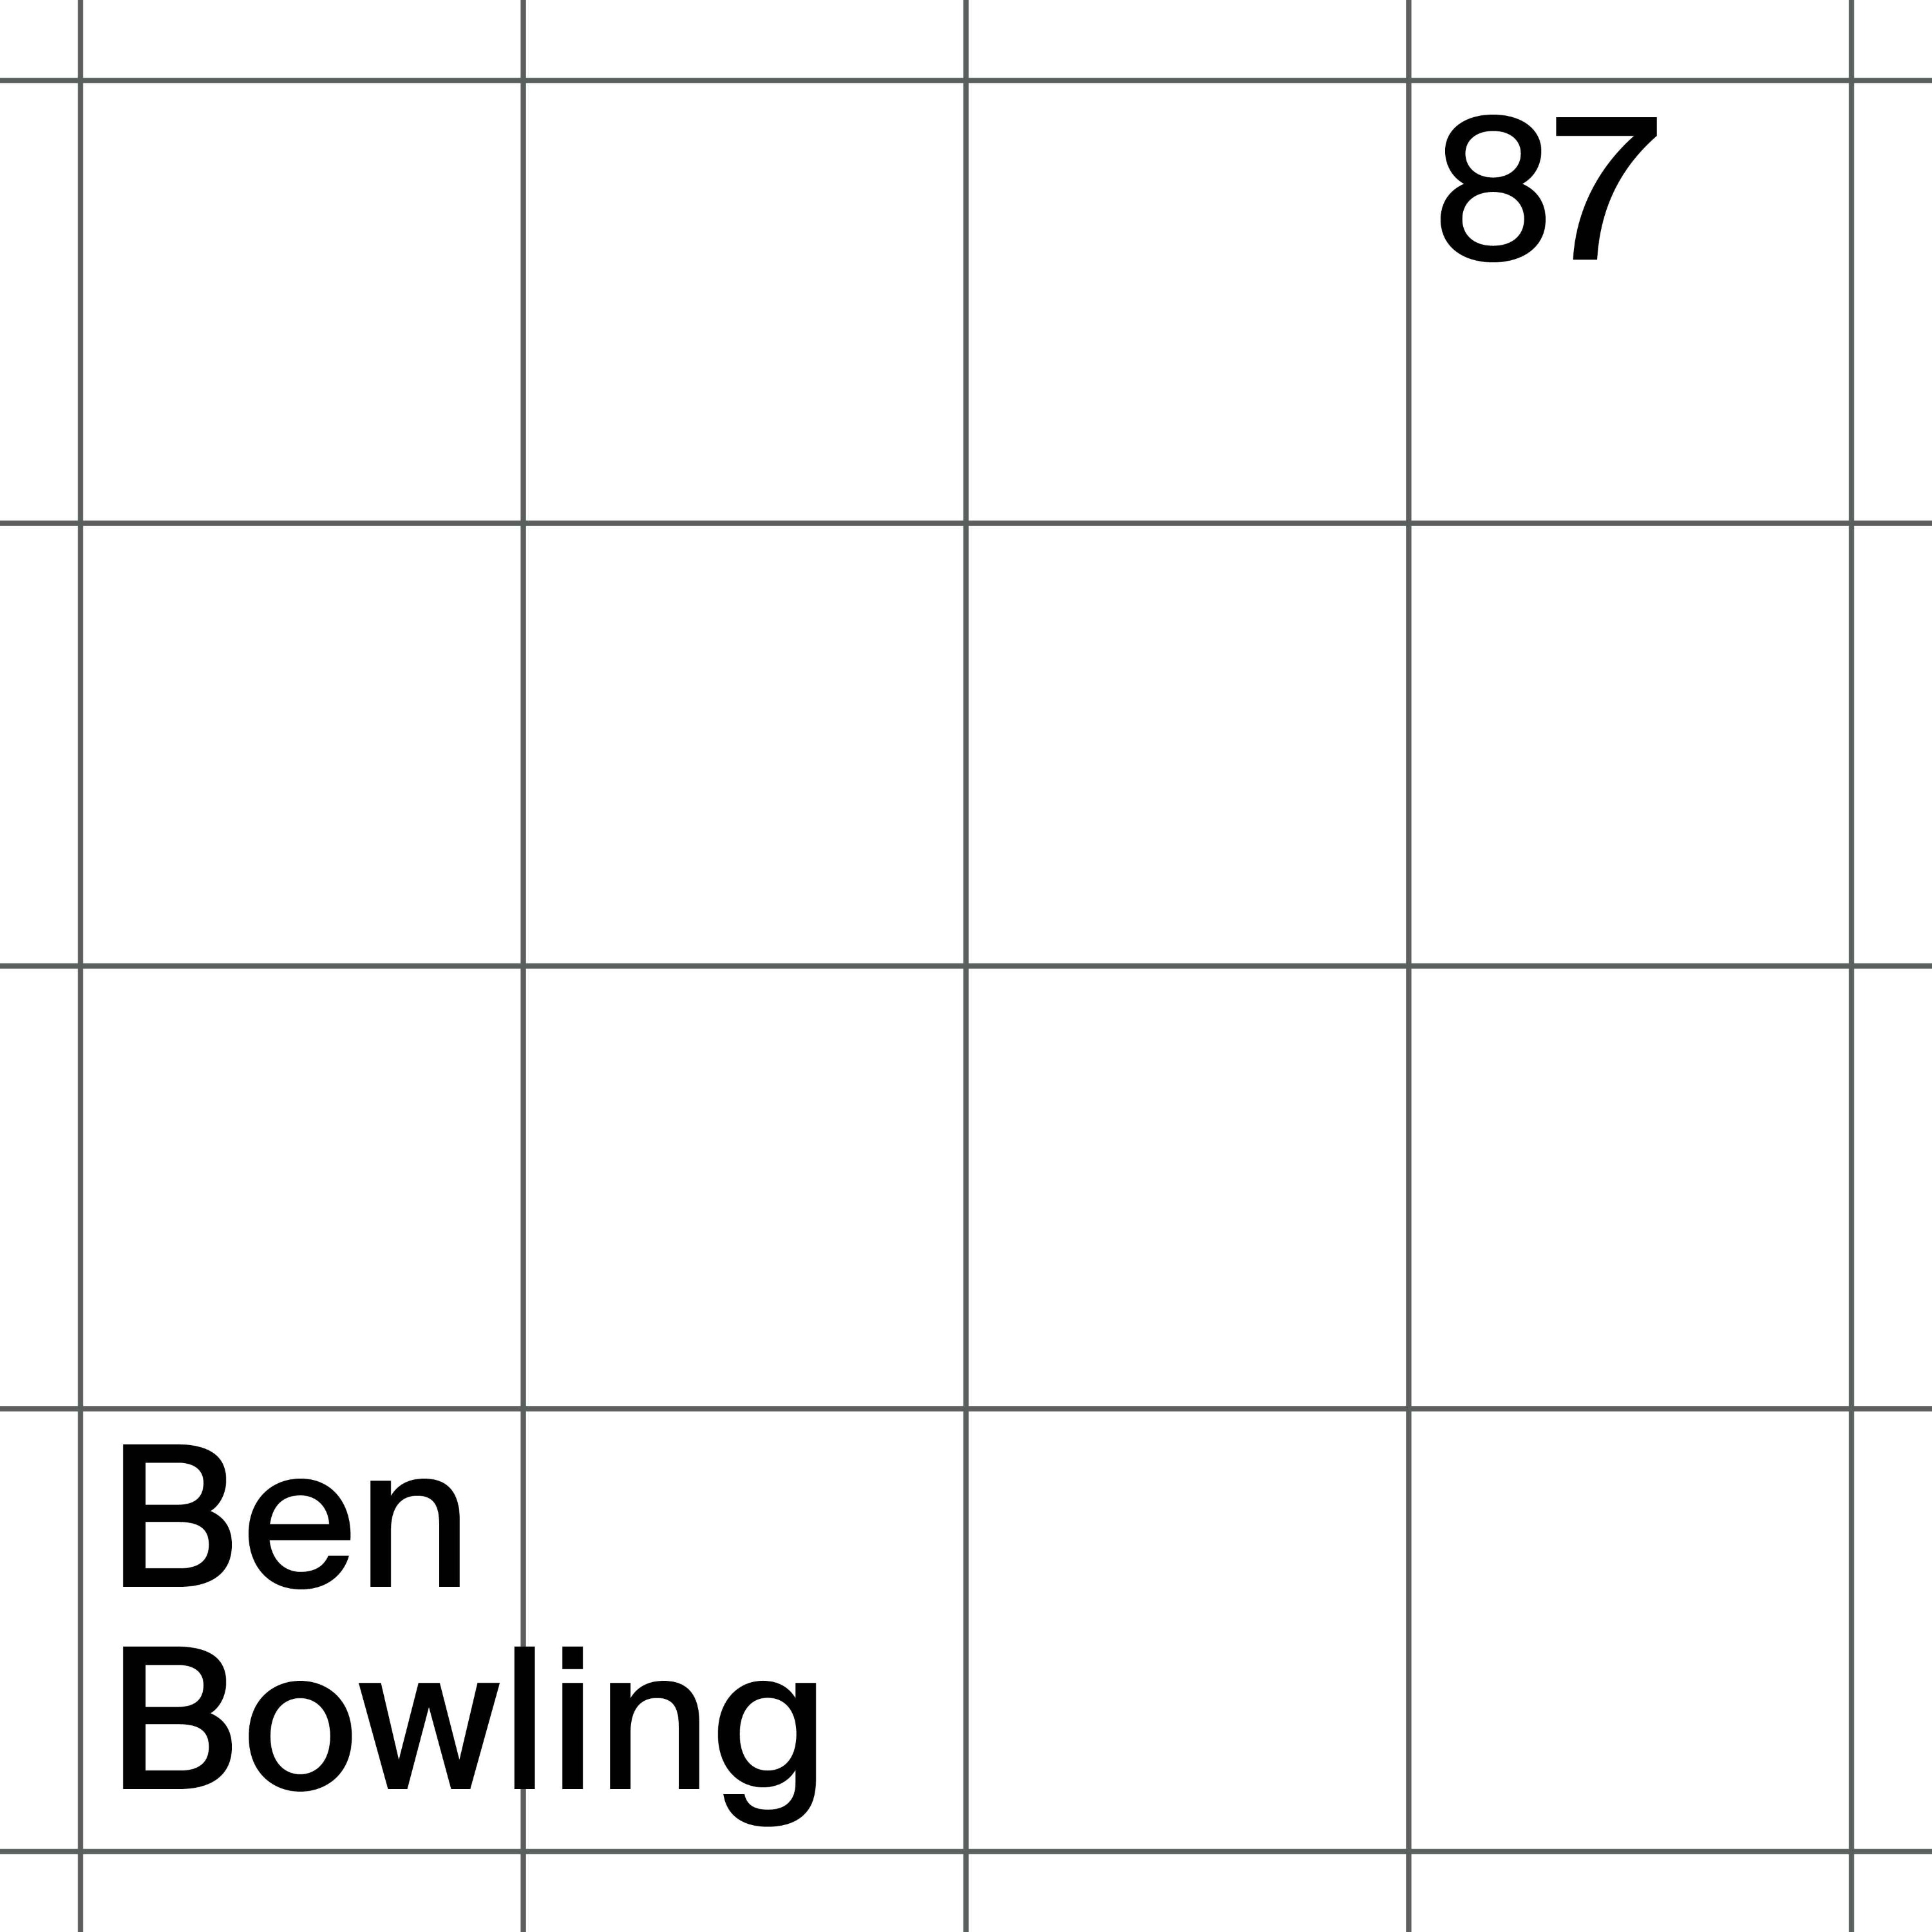 87: Ben Bowling